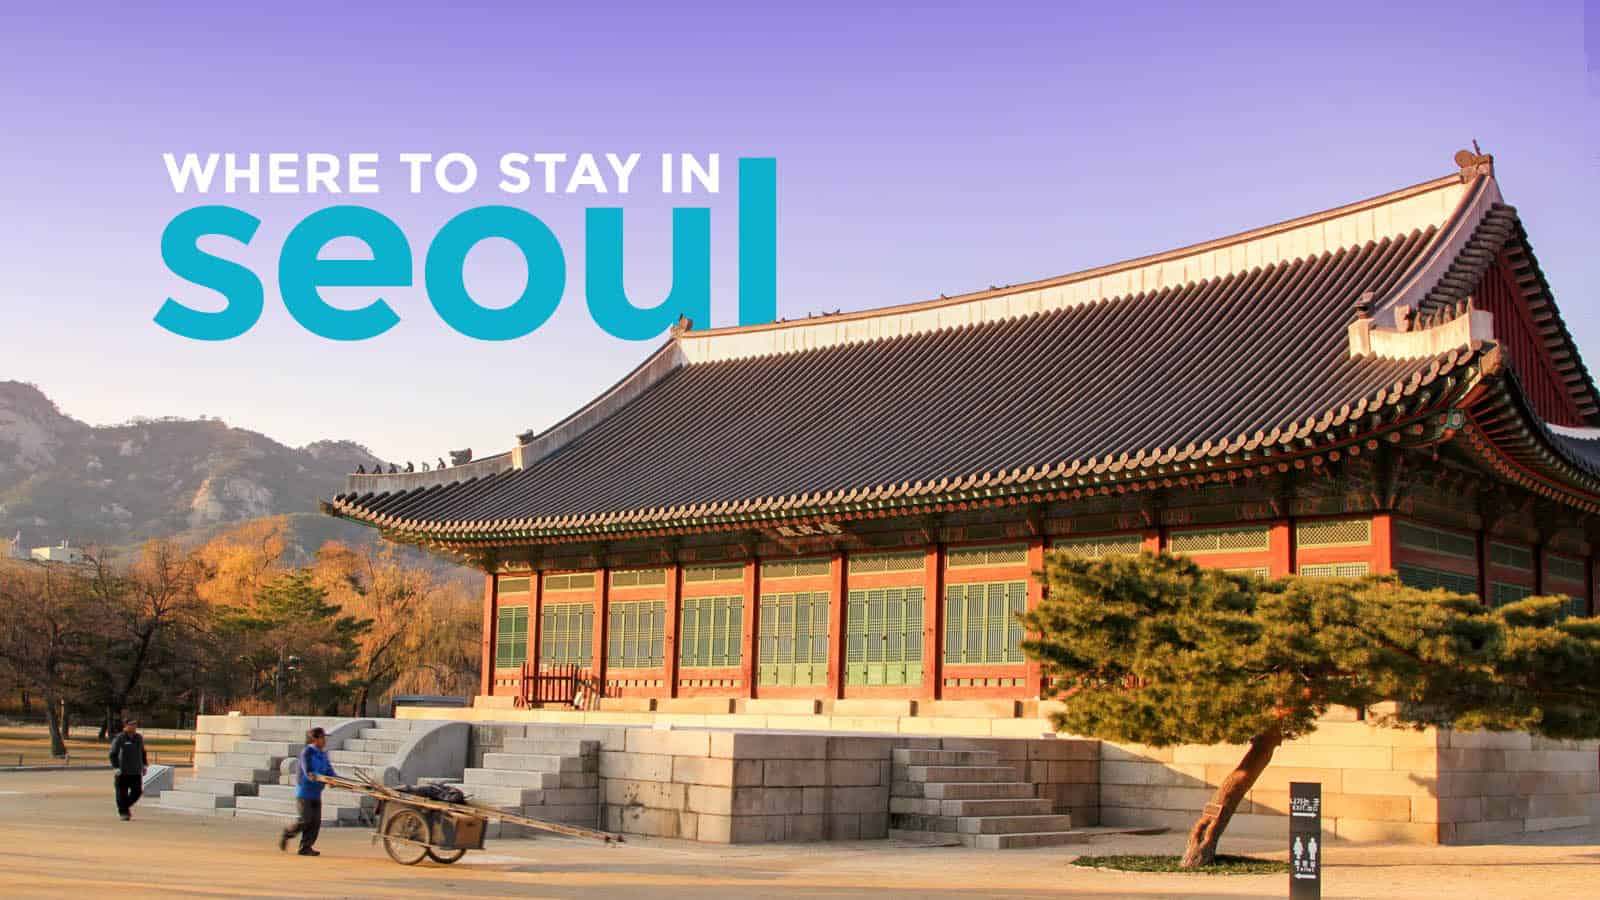 WHERE TO STAY IN SEOUL: Myeongdong, Jongno or Hongdae?